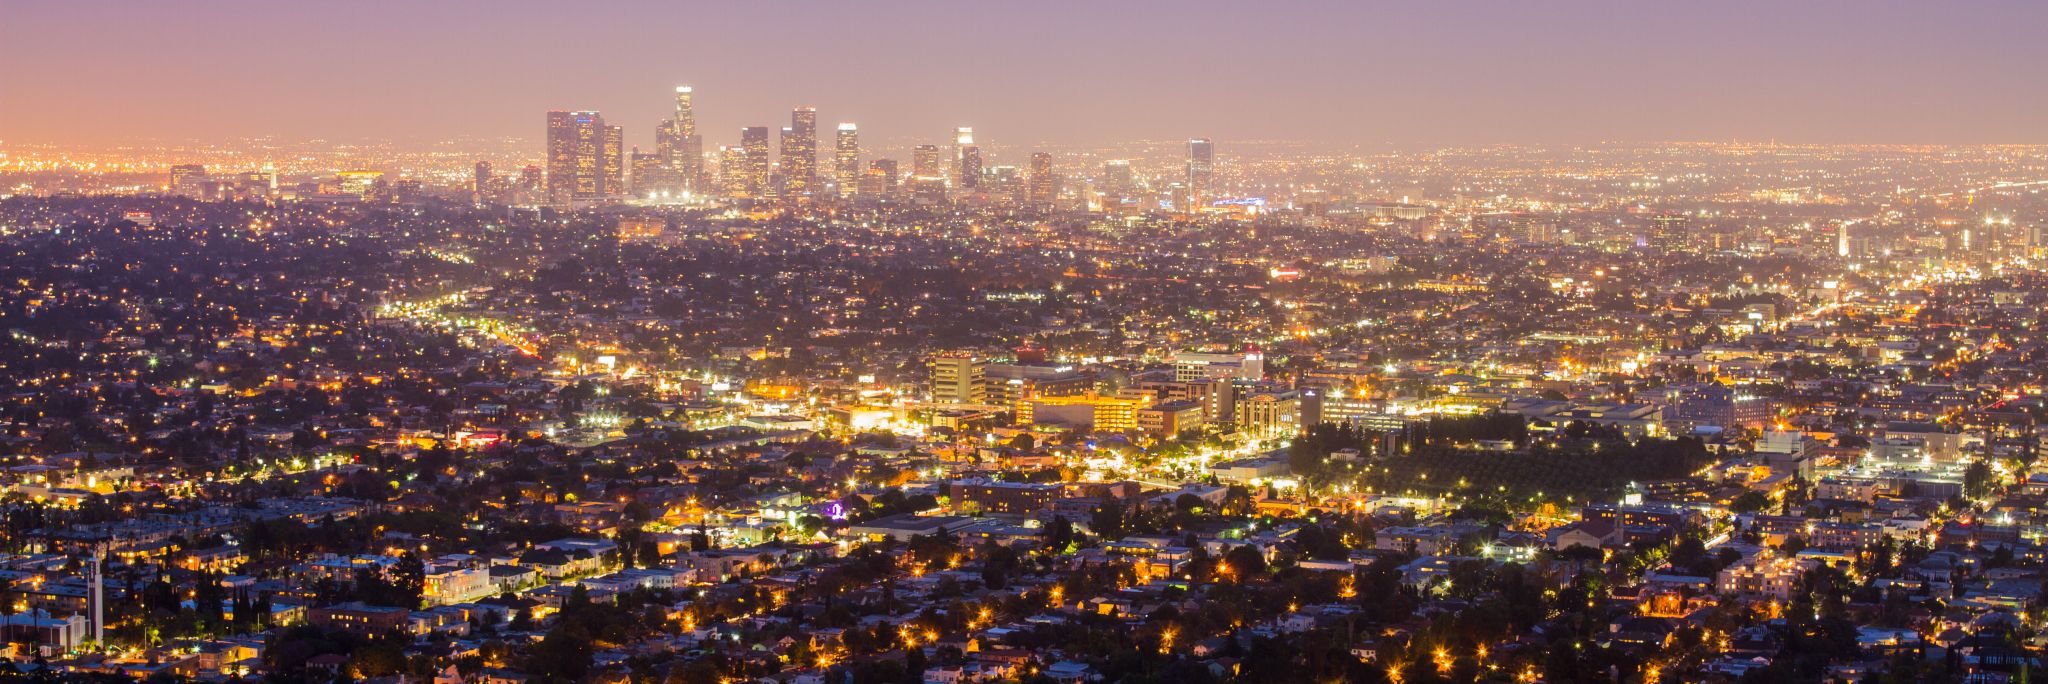 Los Angeles, CA exclusive luxury neighborhoods